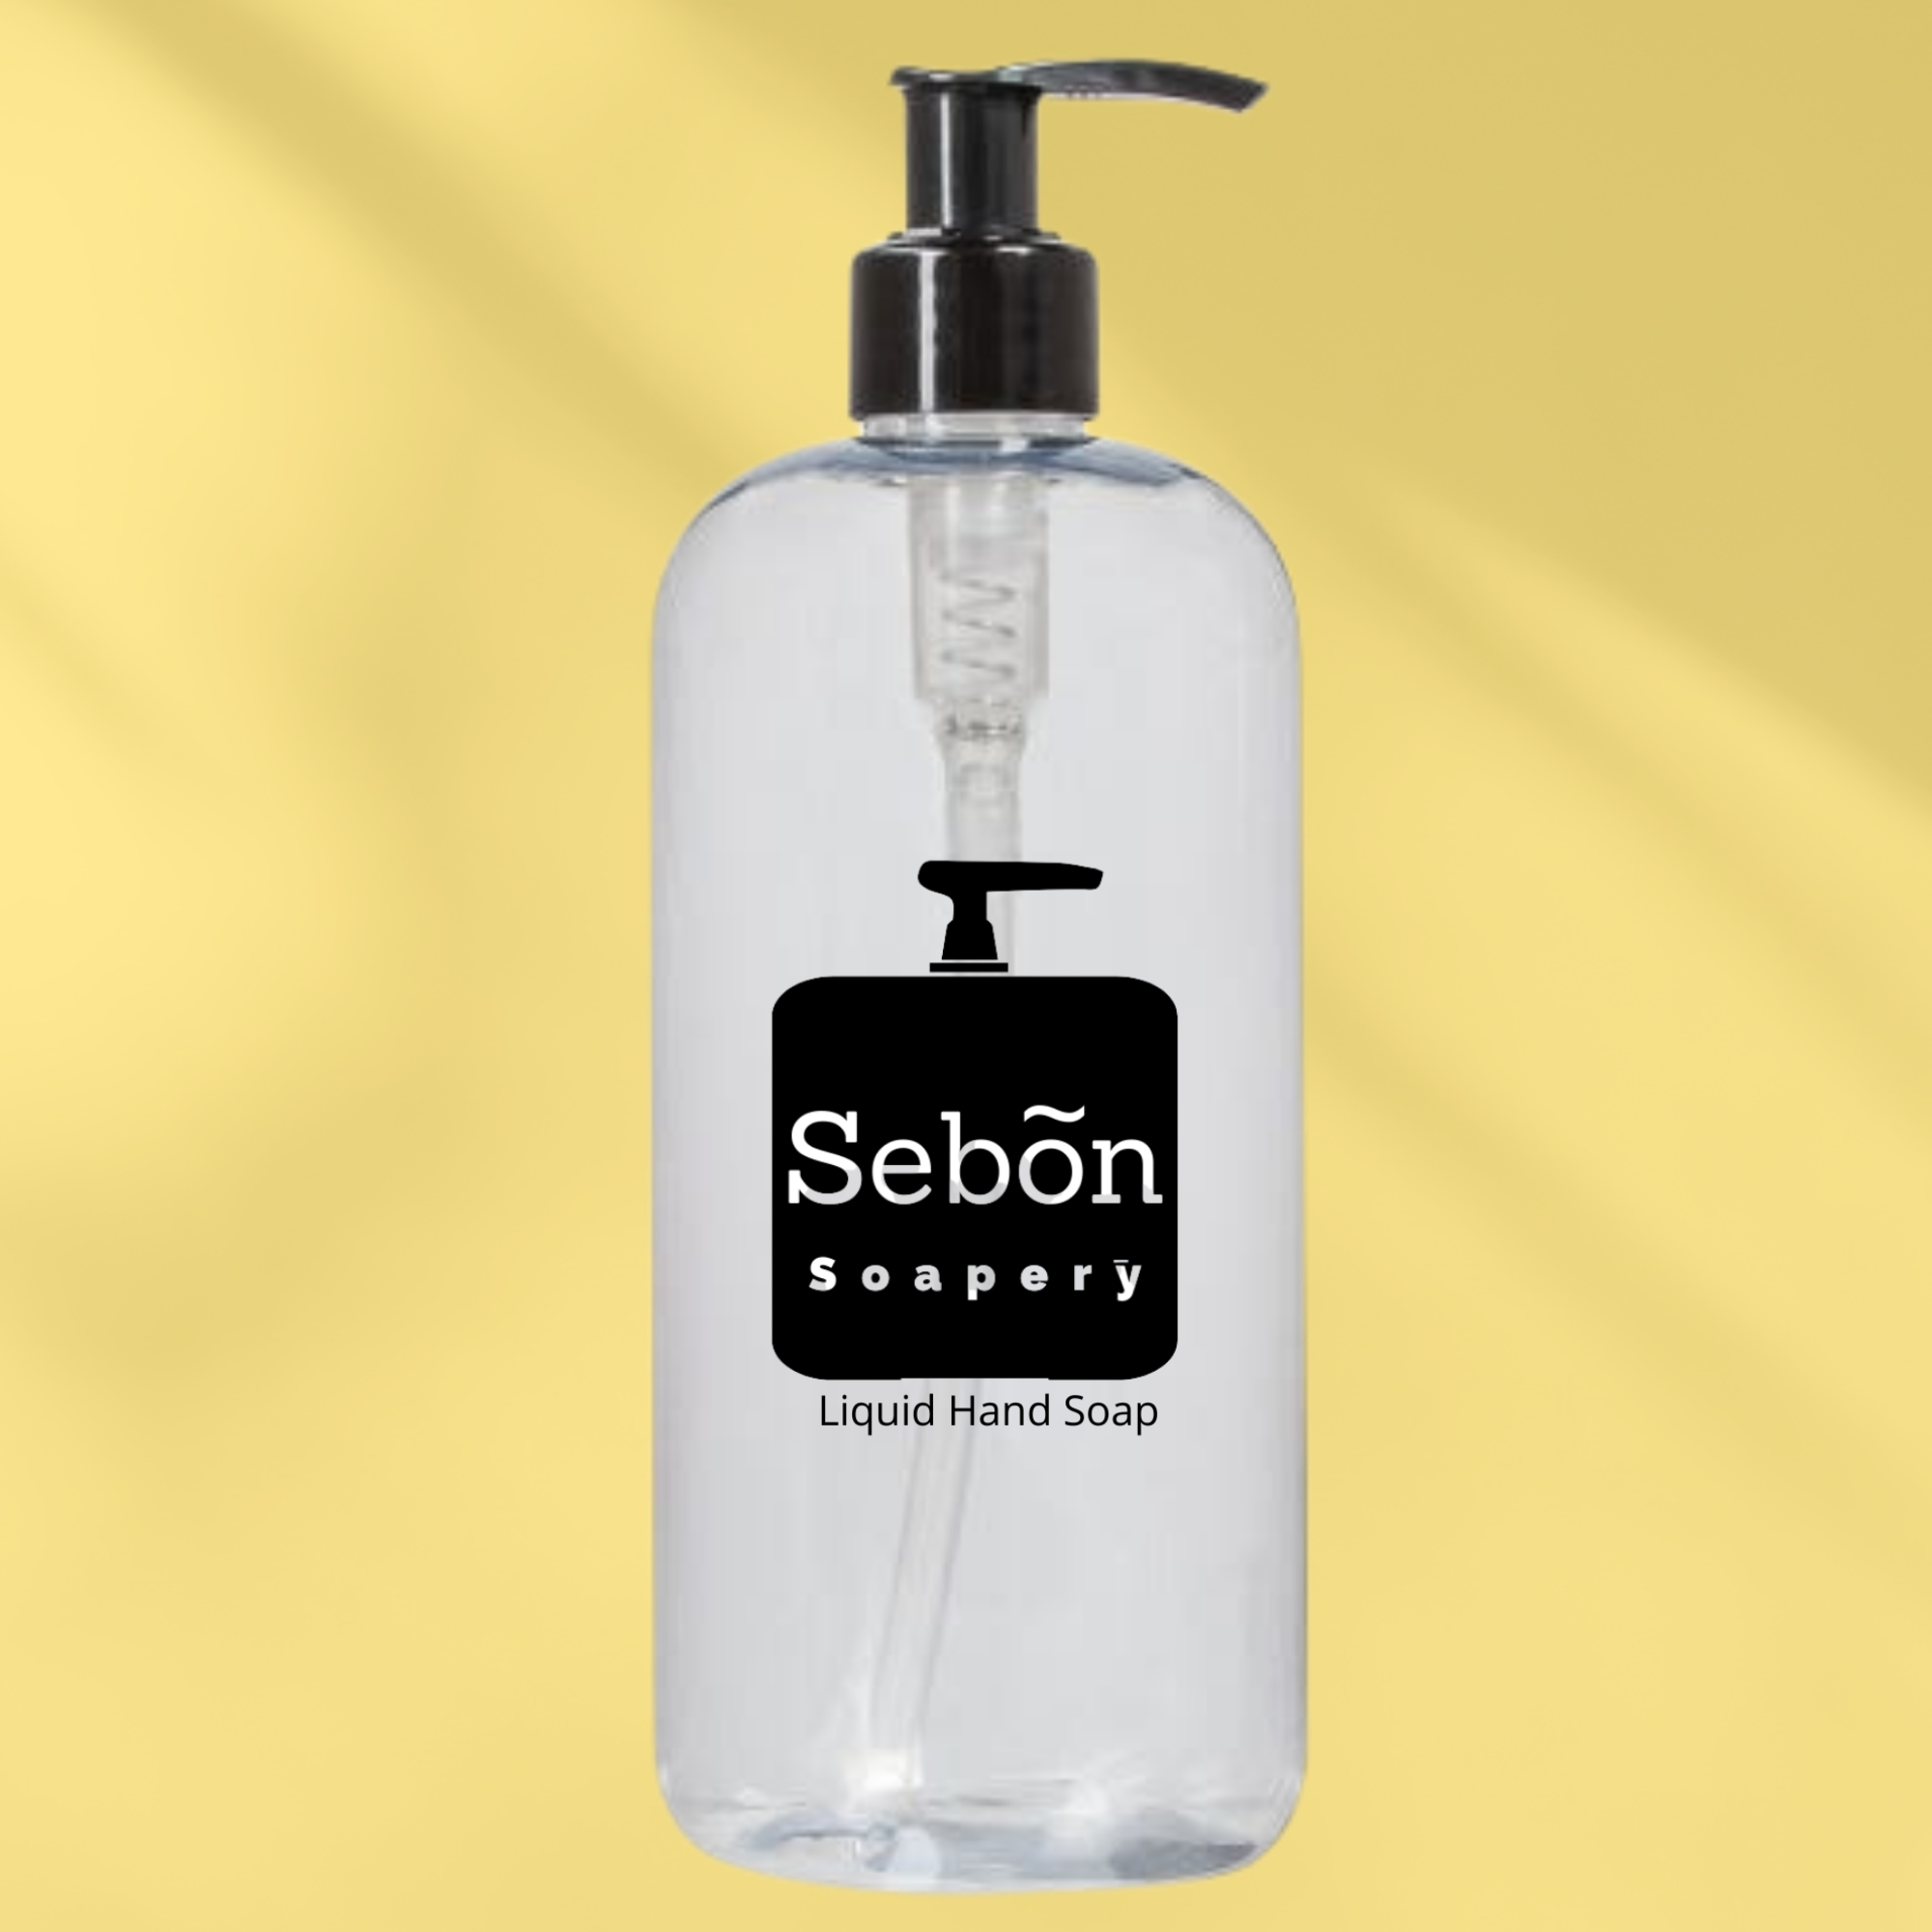 Sebon Green Tea & Amber Scented Liquid Hand Soap with Olive Oil